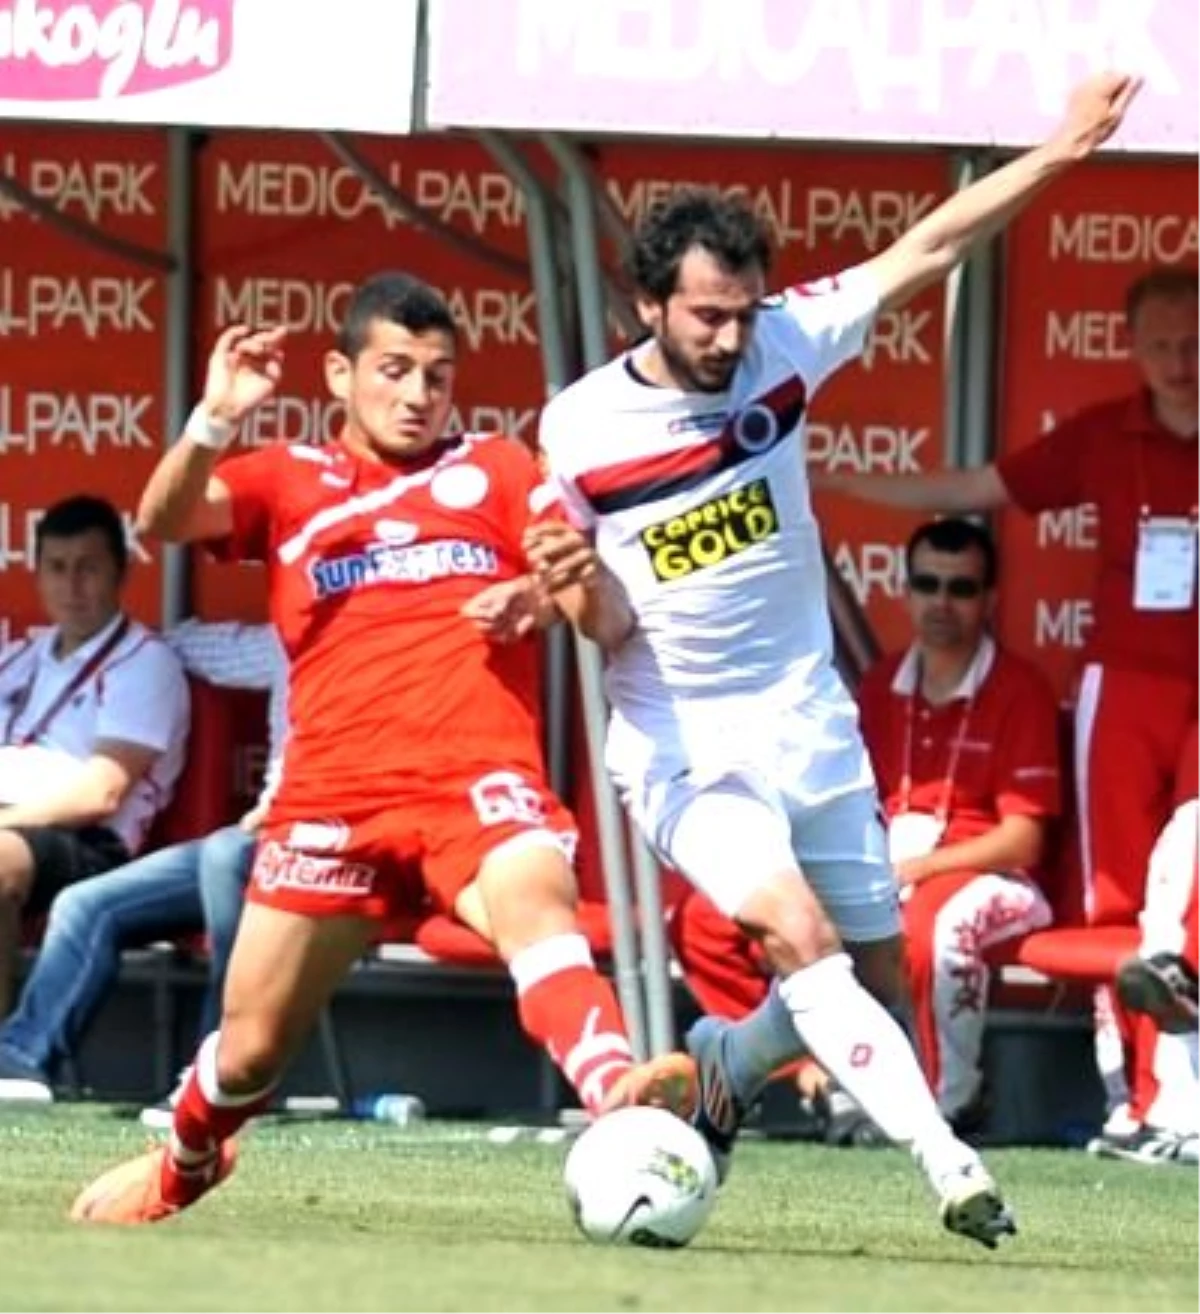 Medical Park Antalyaspor - Gençlerbirliği: 1-3